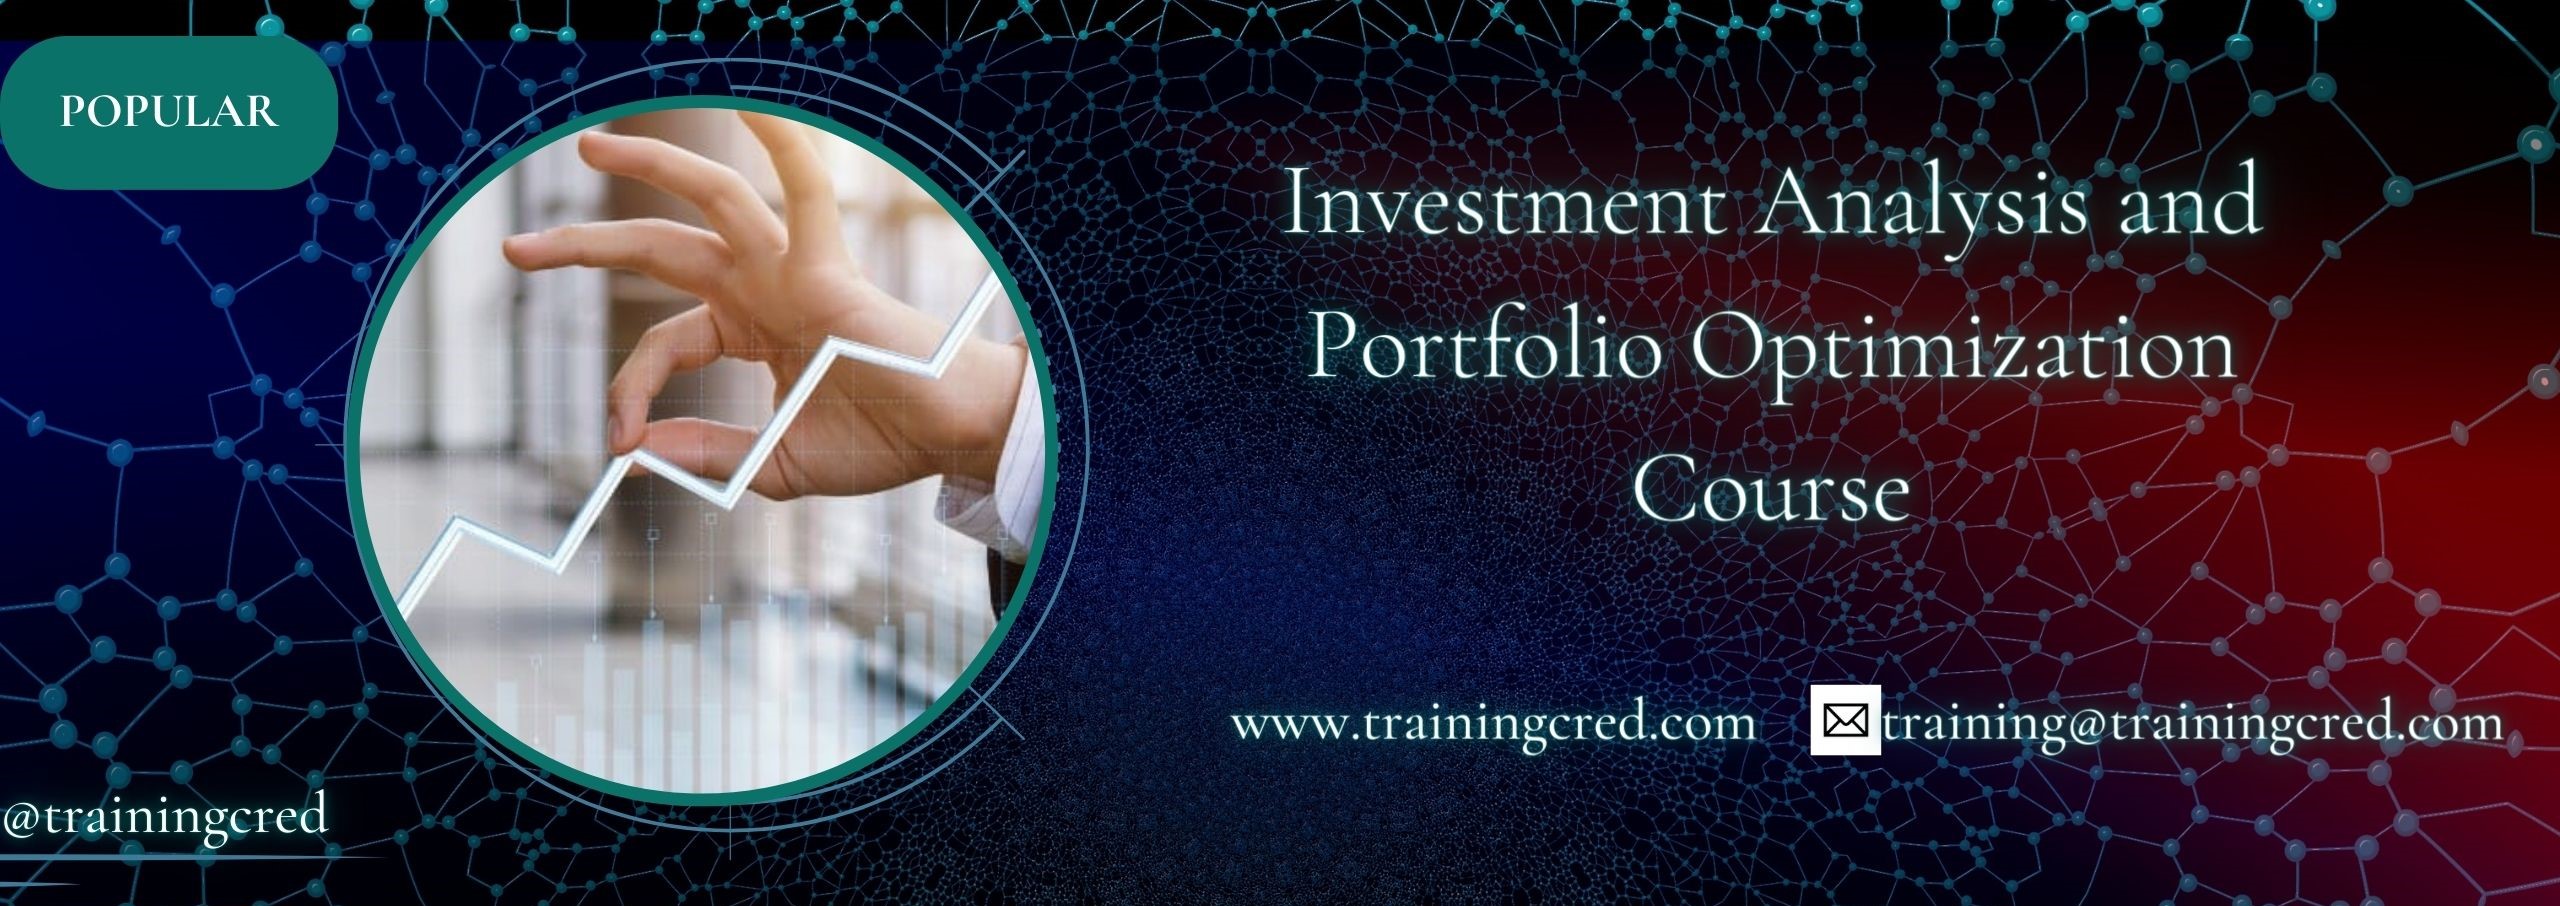 Investment Analysis and Portfolio Management Training